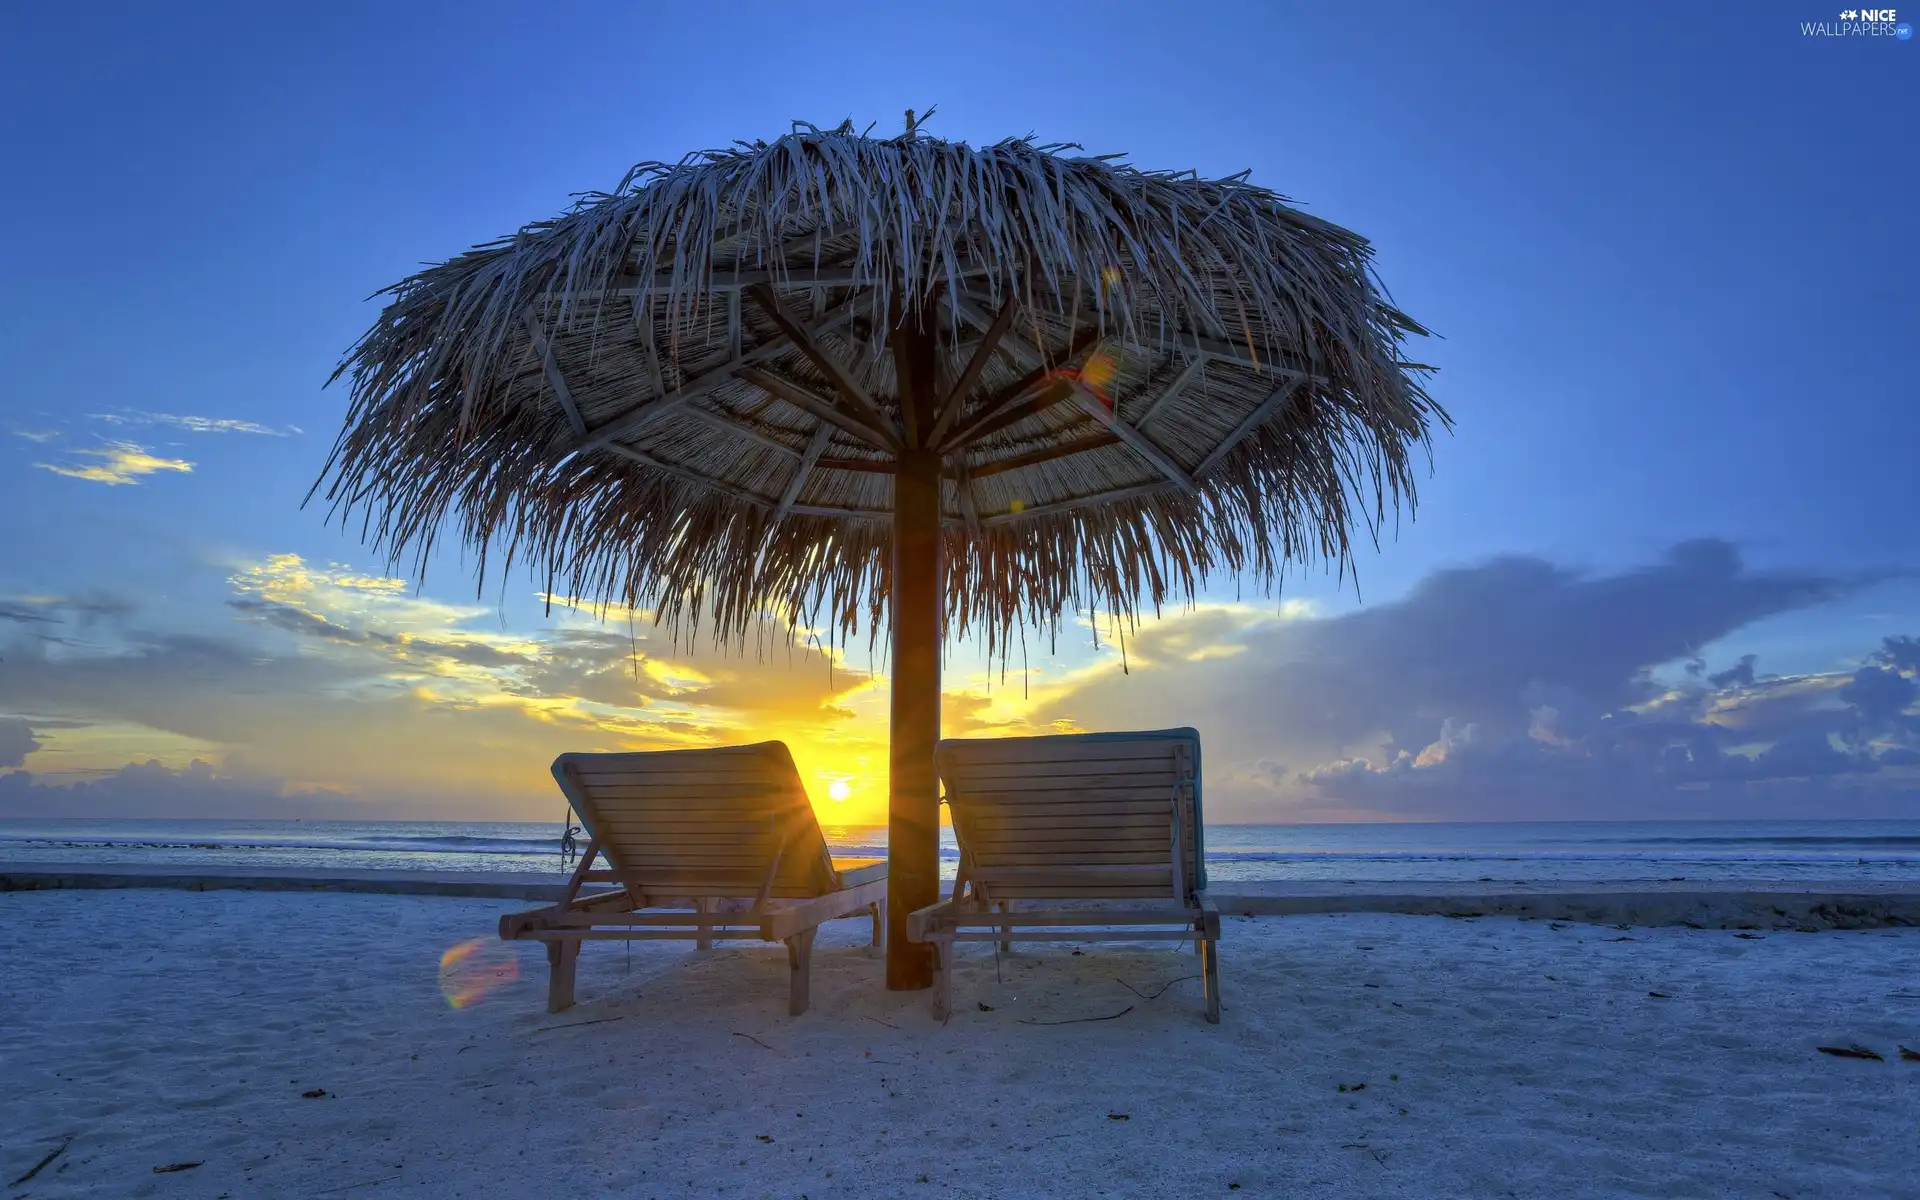 sea, Umbrella, sun, deck chair, Beaches, west, holiday